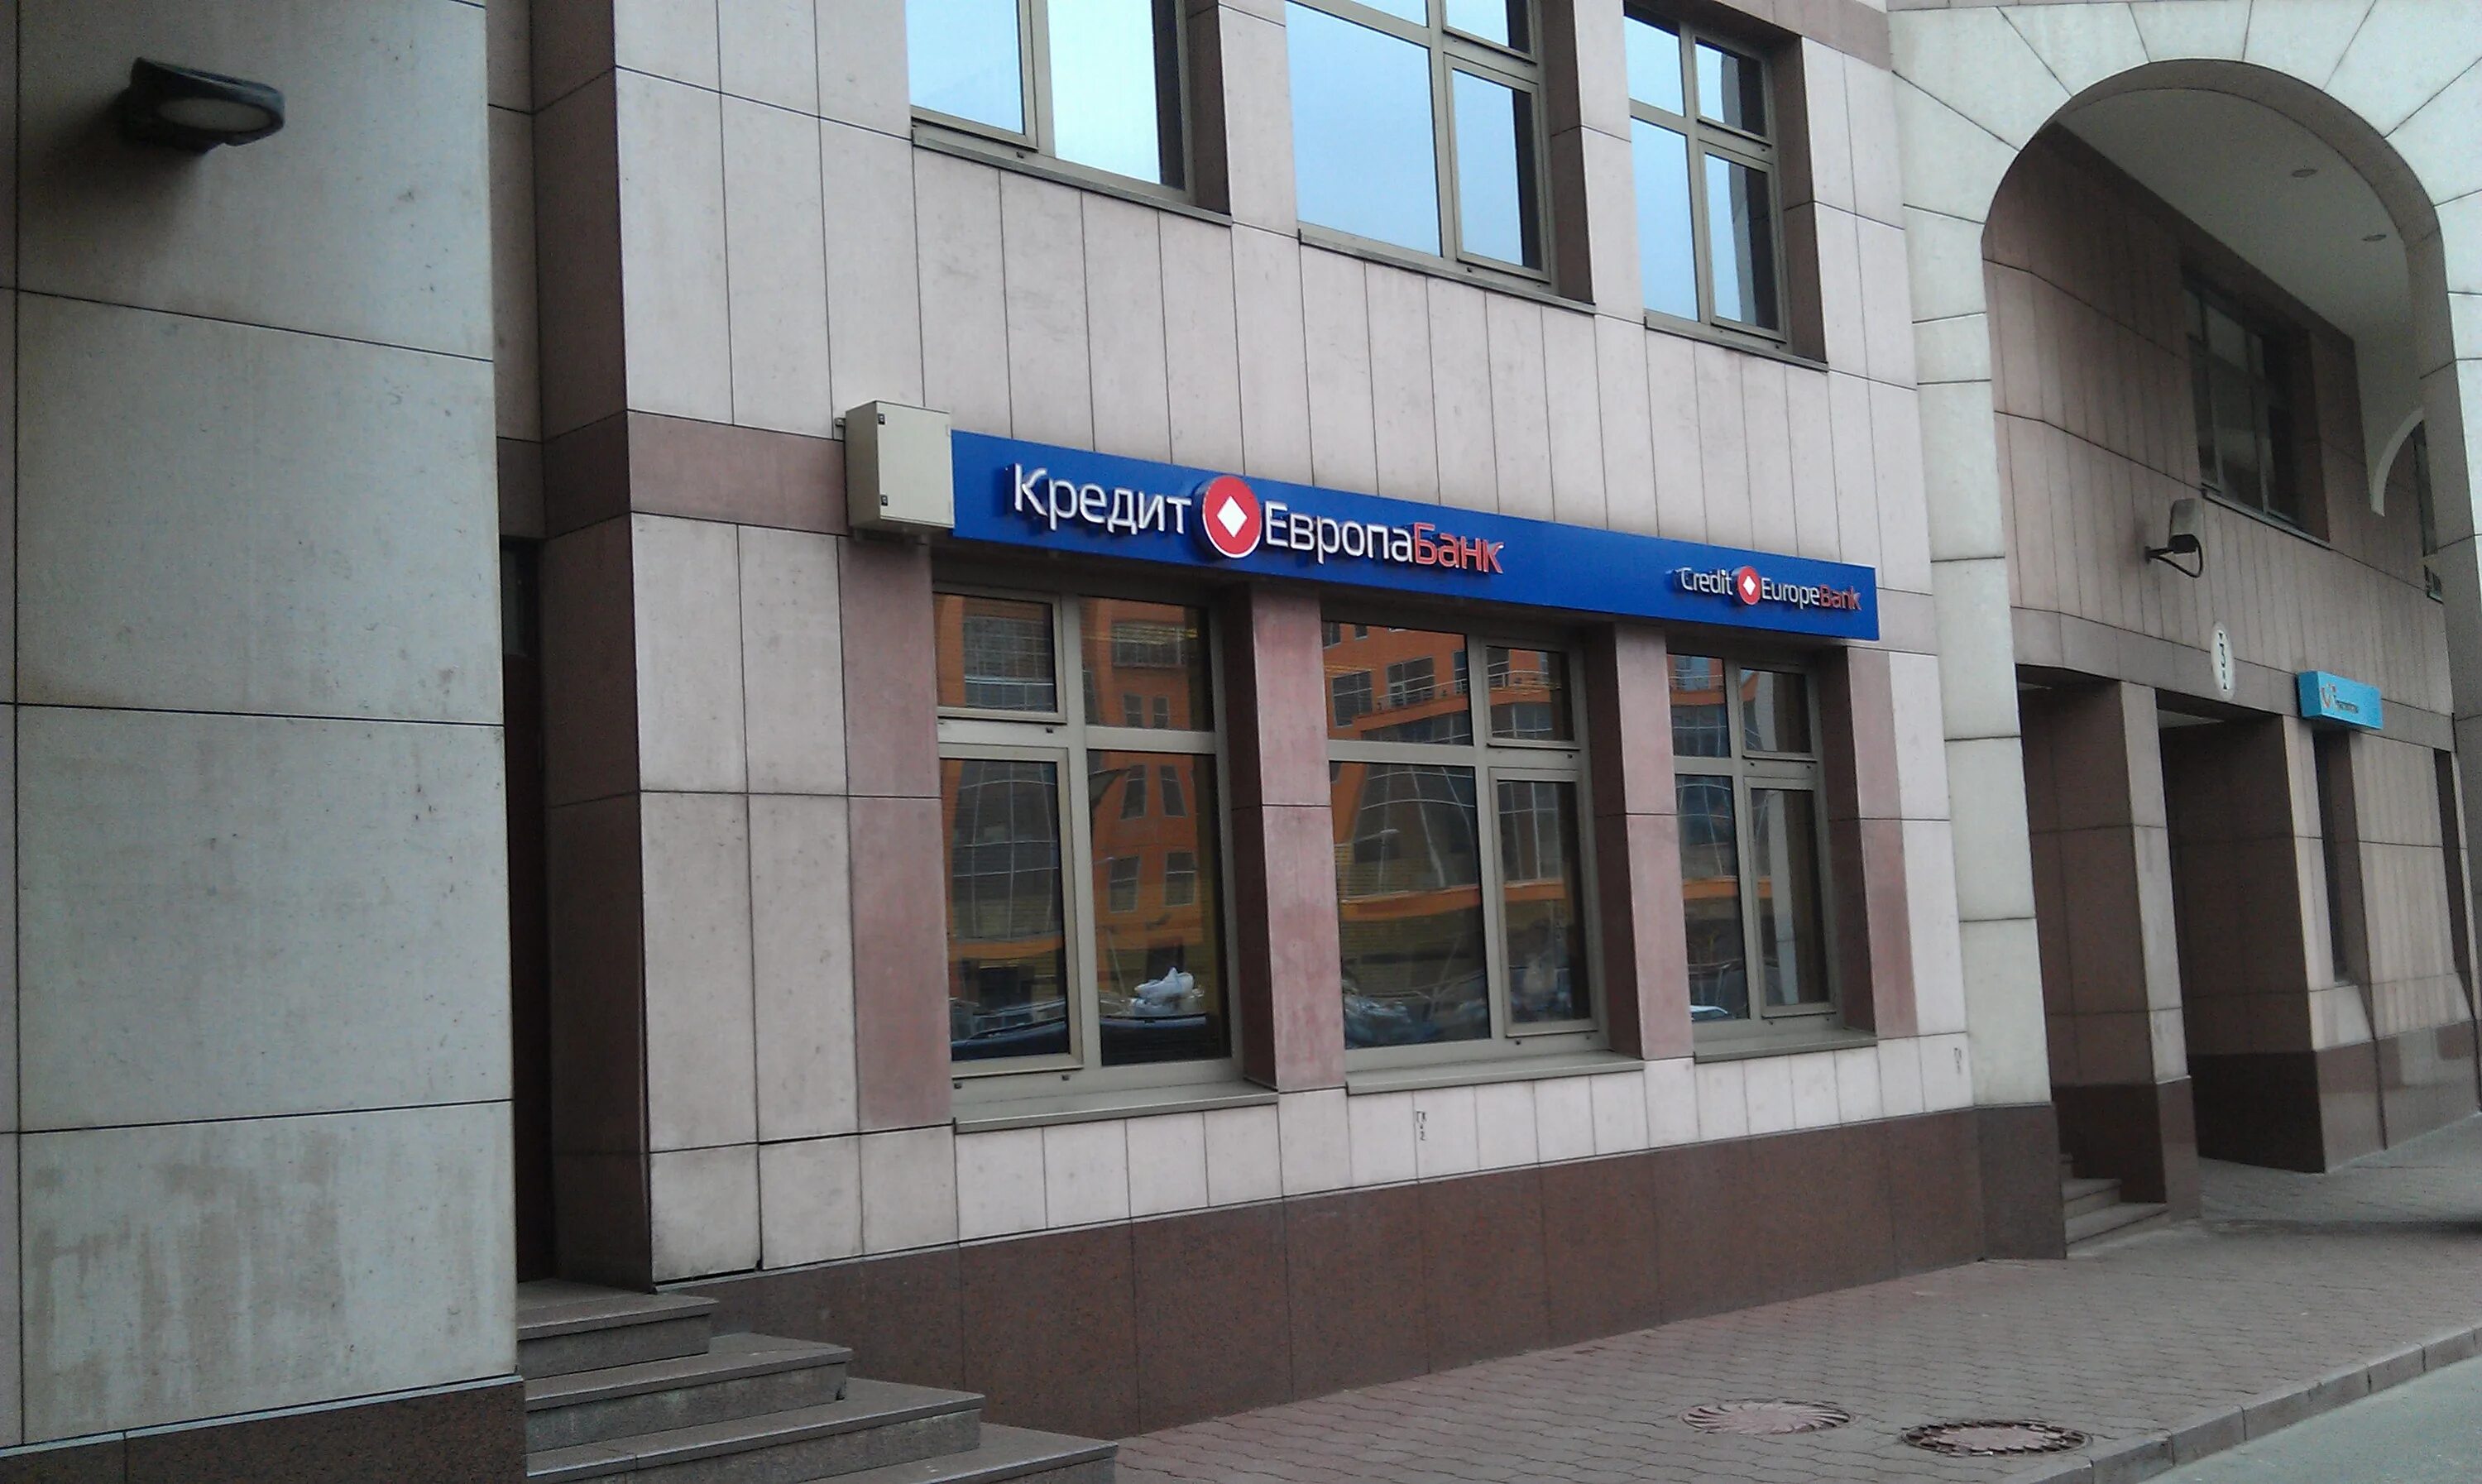 Европа банк. Банк Новосибирск. Кредит Европа банк фото. Отделение банка кредит Европа. Кредит европа ру